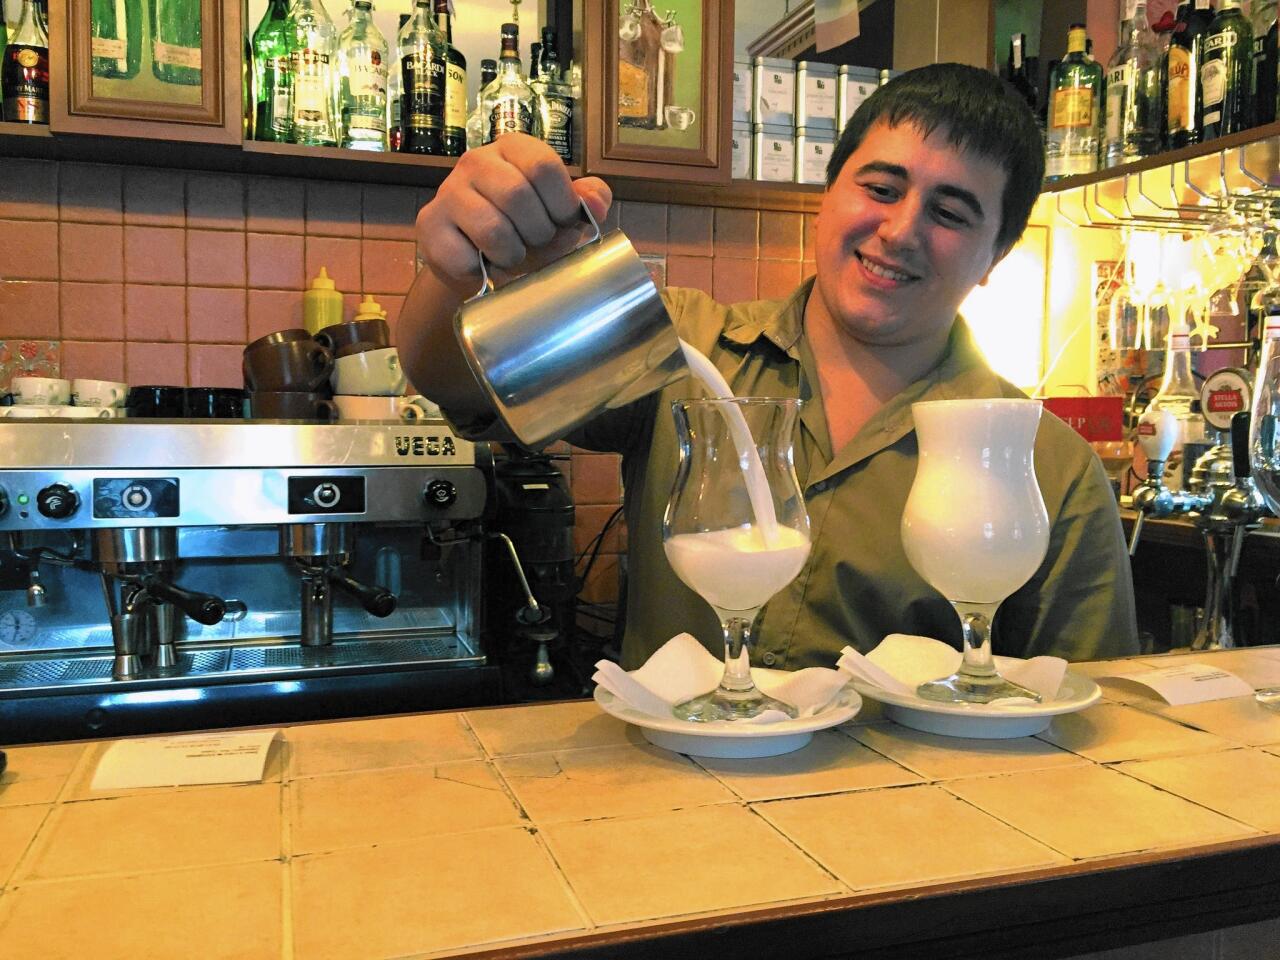 Kiev: Coffee lovers' destination